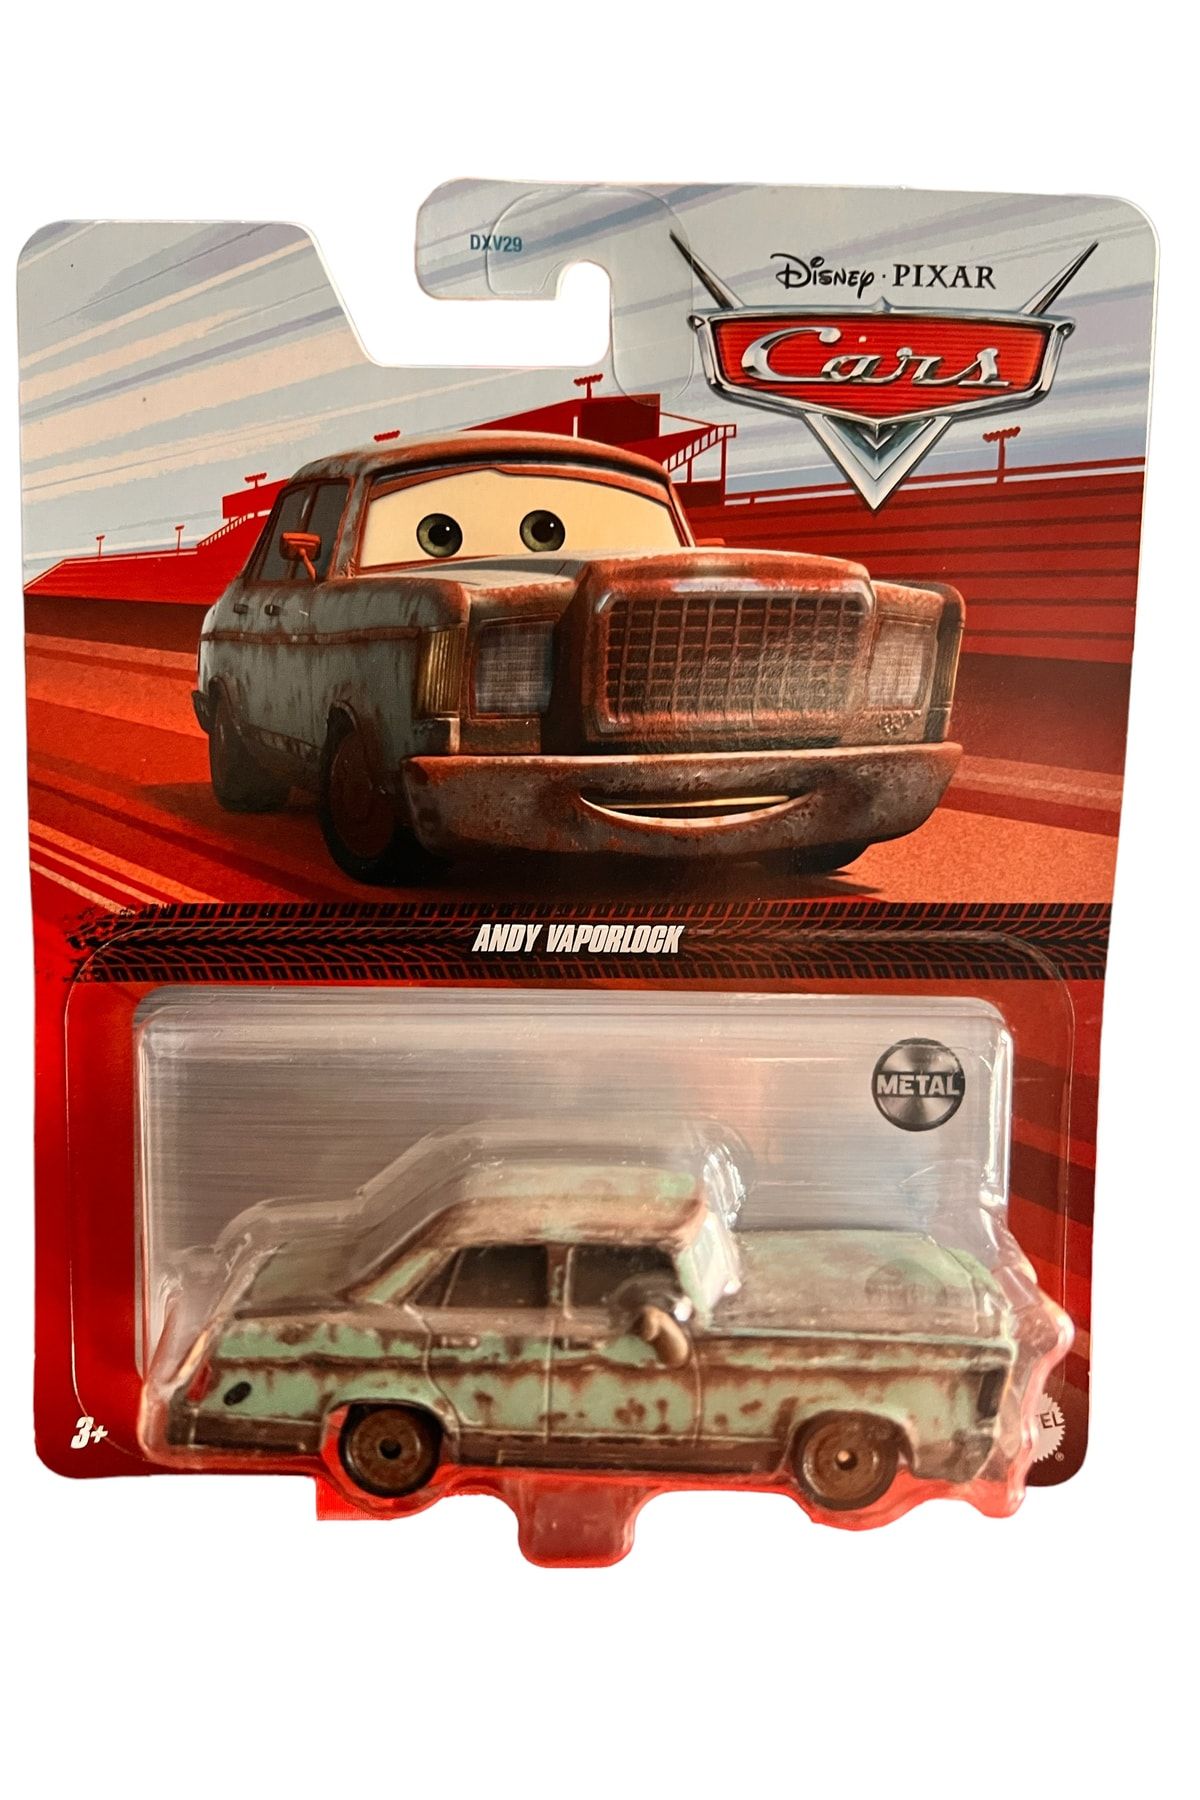 Pixar Cars Disney Cars 3 Andy Vaporlock Cars 3 Film Figür